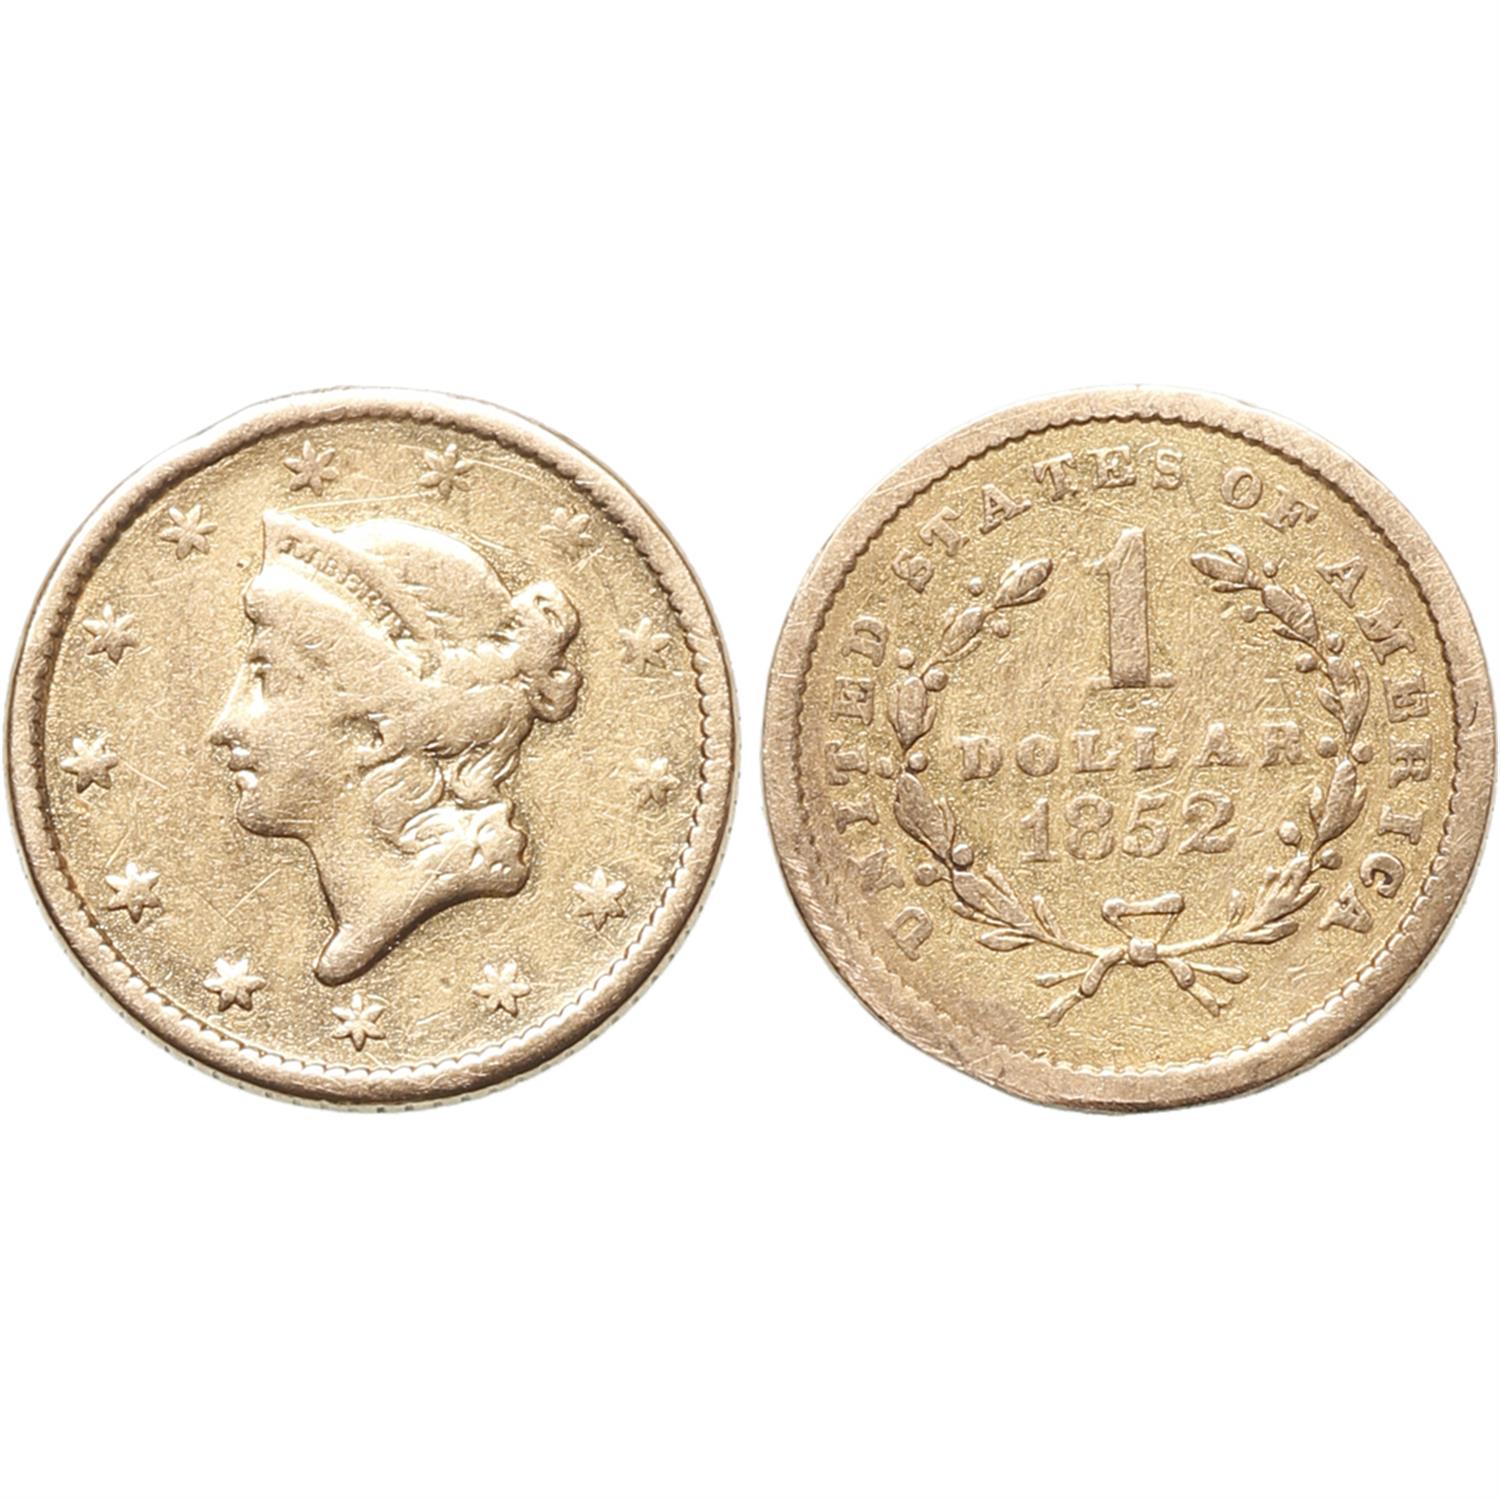 United States of America AV 1 'Liberty Head' Dollar.